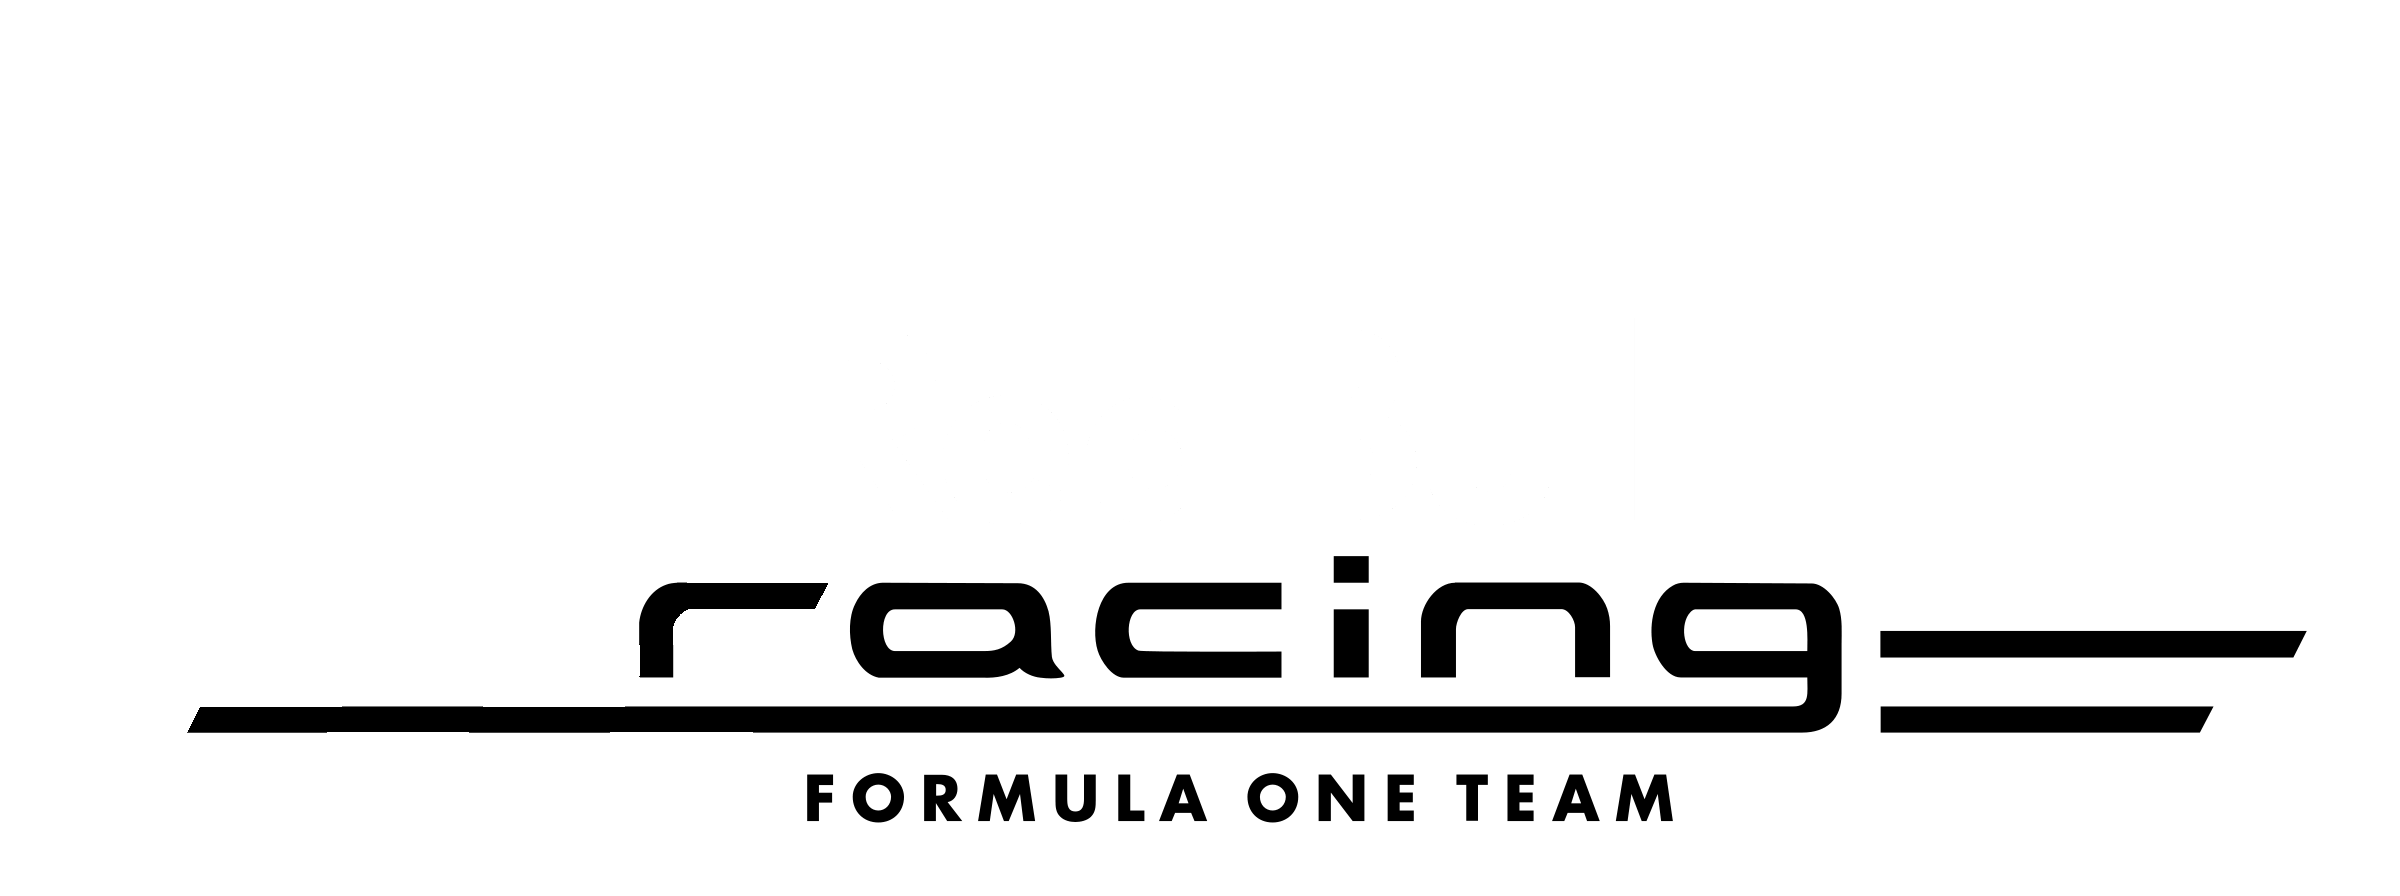 Red Bull Racing Logo - Red Bull Racing Formula One Team Logo PNG Transparent & SVG Vector